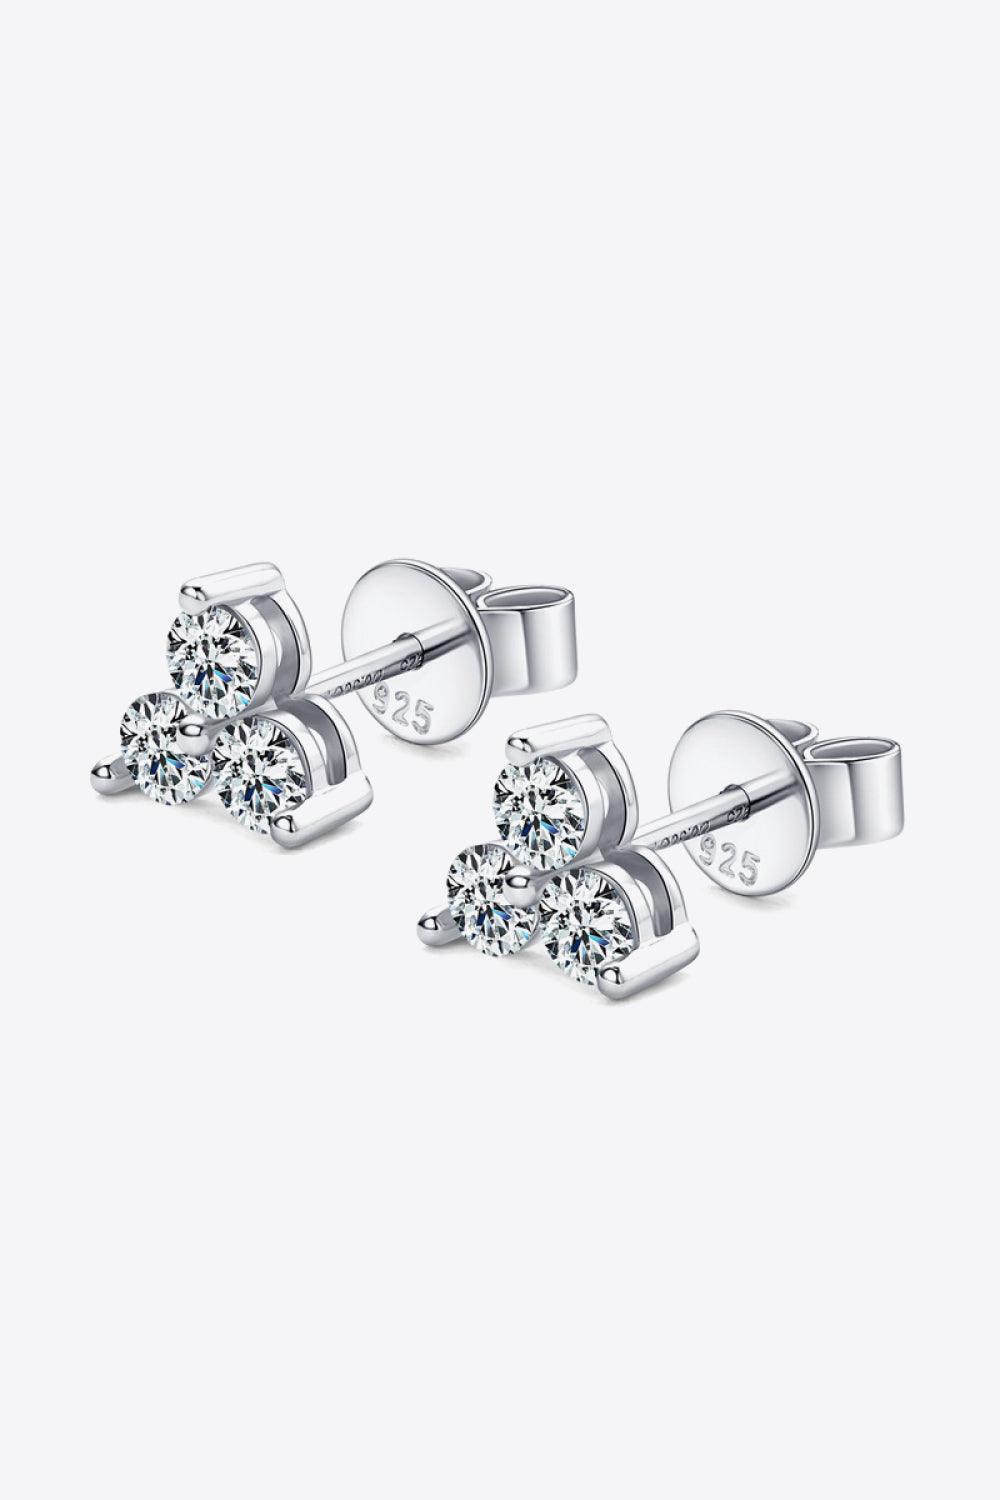 Three Round Inlaid Moissanite Stud Earrings - MXSTUDIO.COM